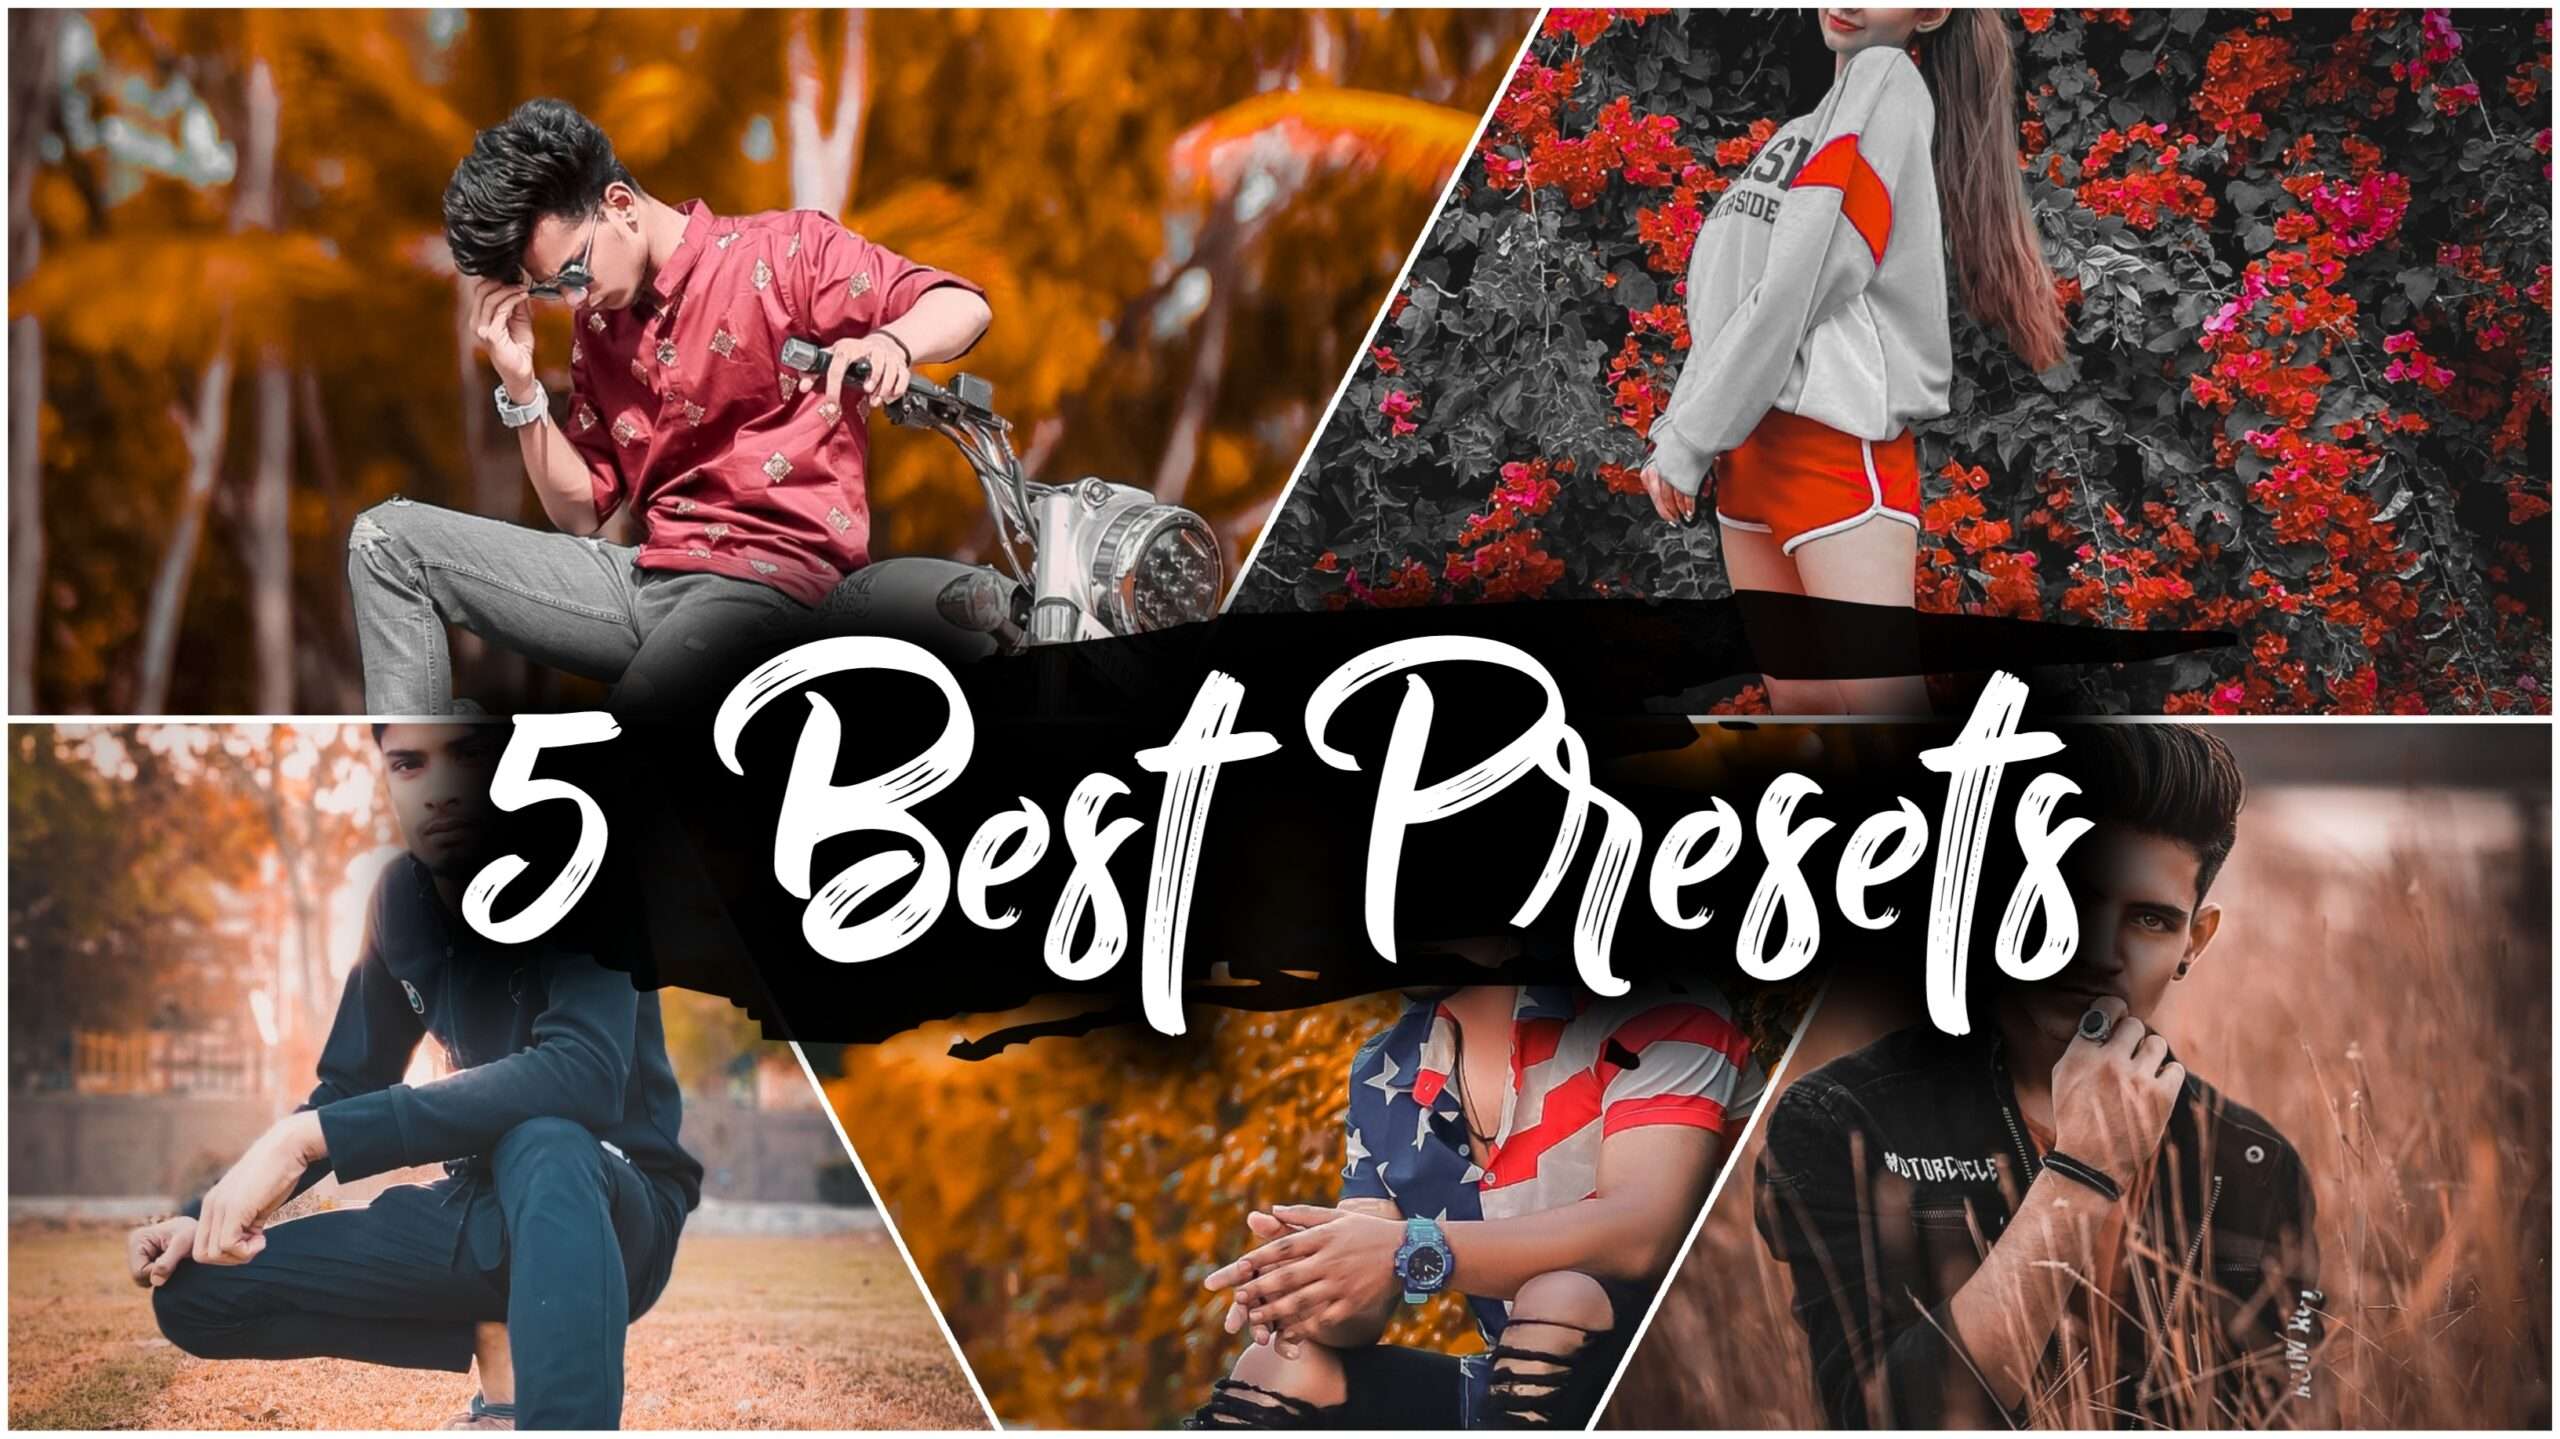 5 Best Presets Free Download||Saha Social best Presets